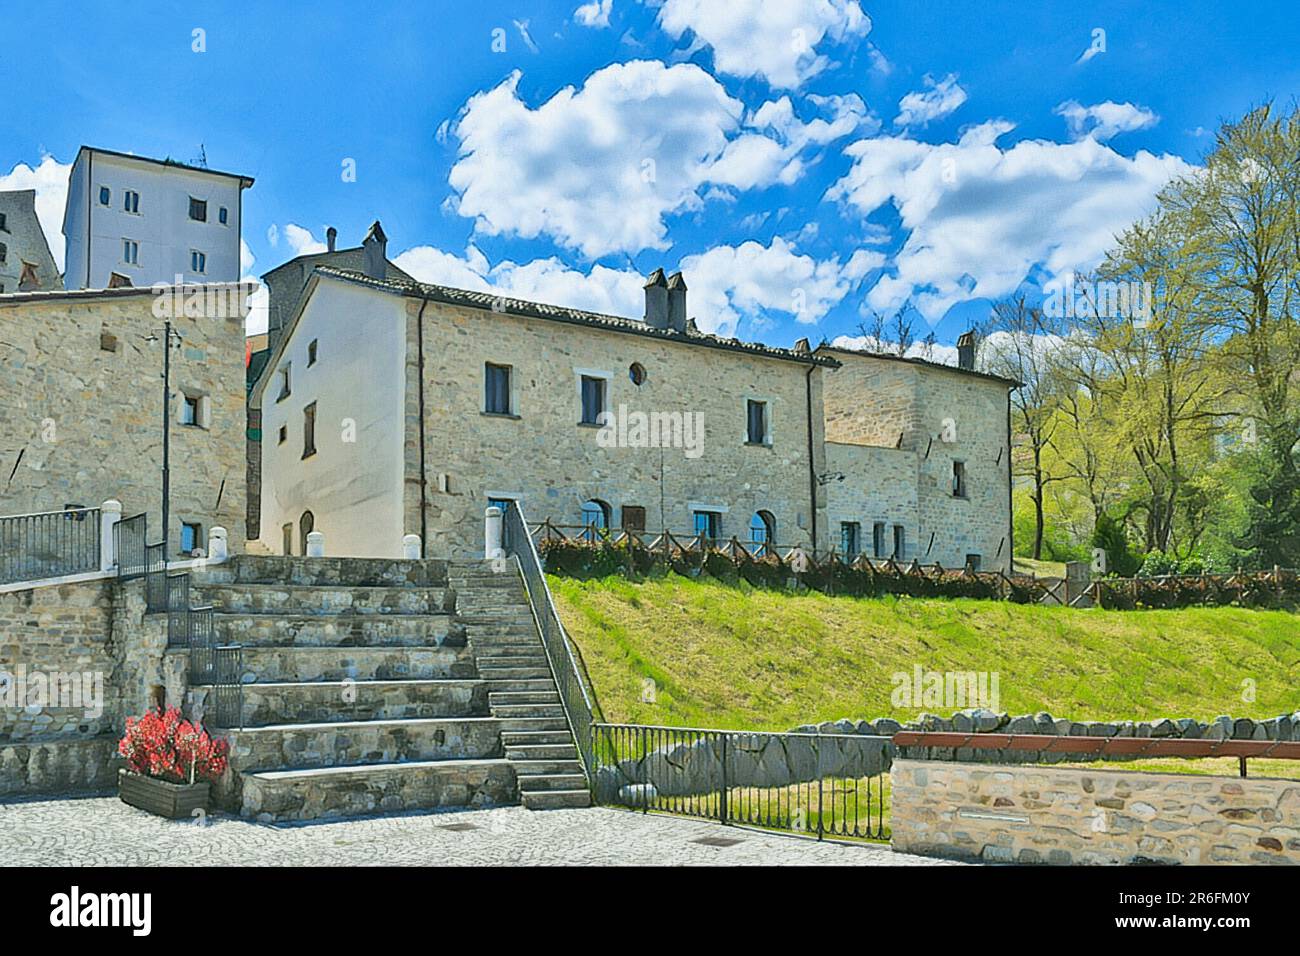 View of Borgotufi, a mountain village in the Molise region, Italy. Stock Photo